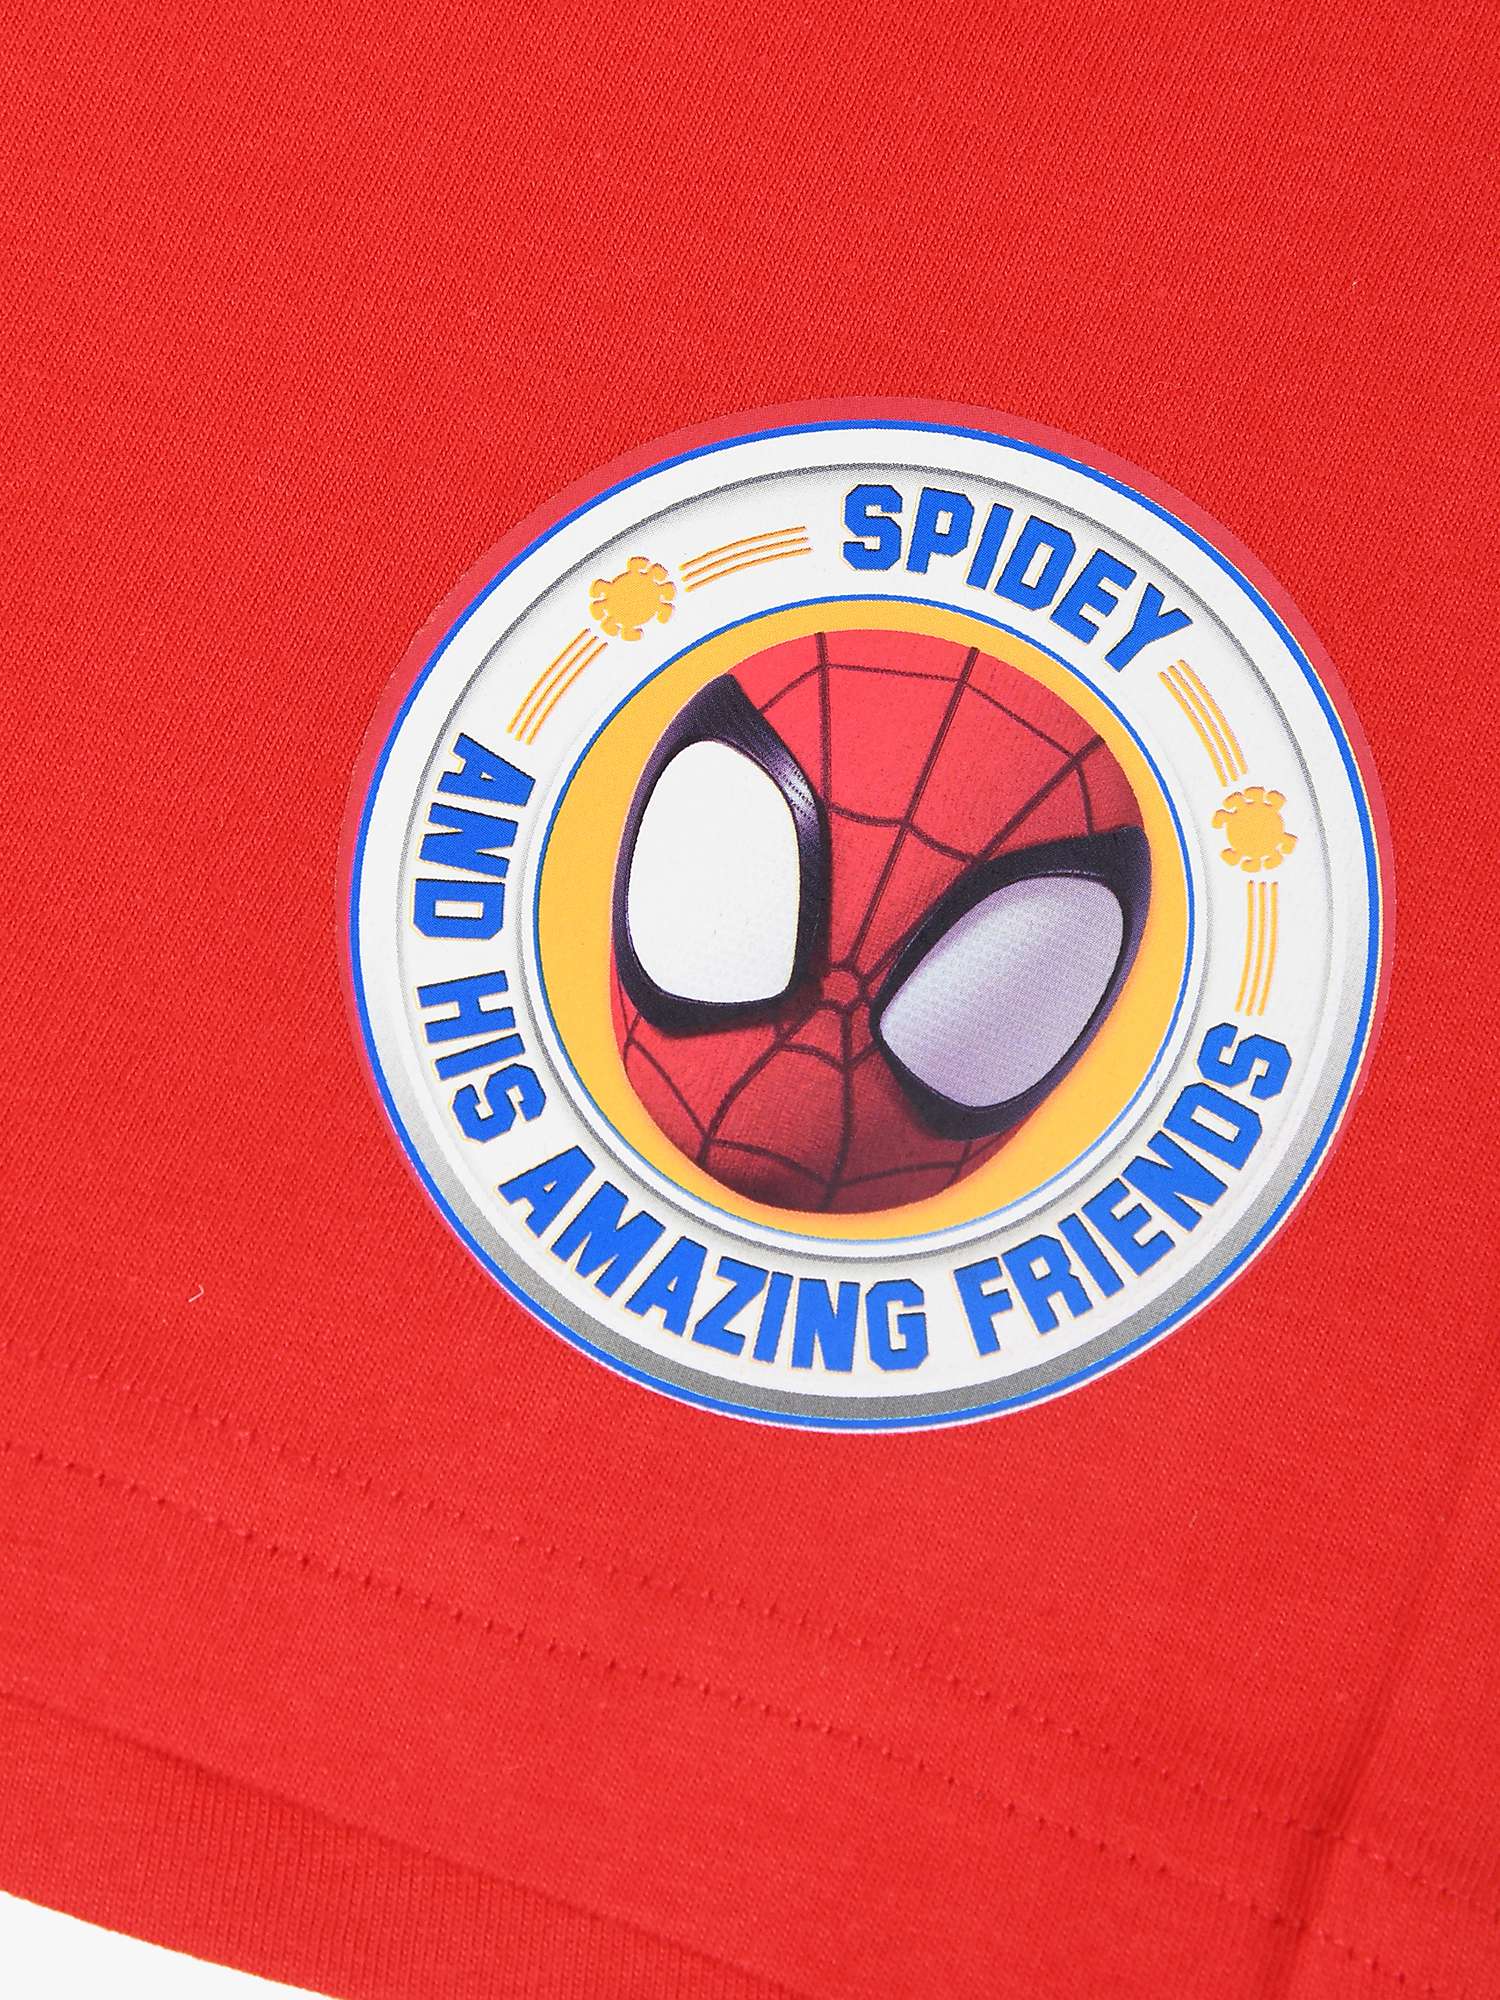 Buy Brand Threads Kids' Spiderman Pyjama Set, Red/Multi Online at johnlewis.com